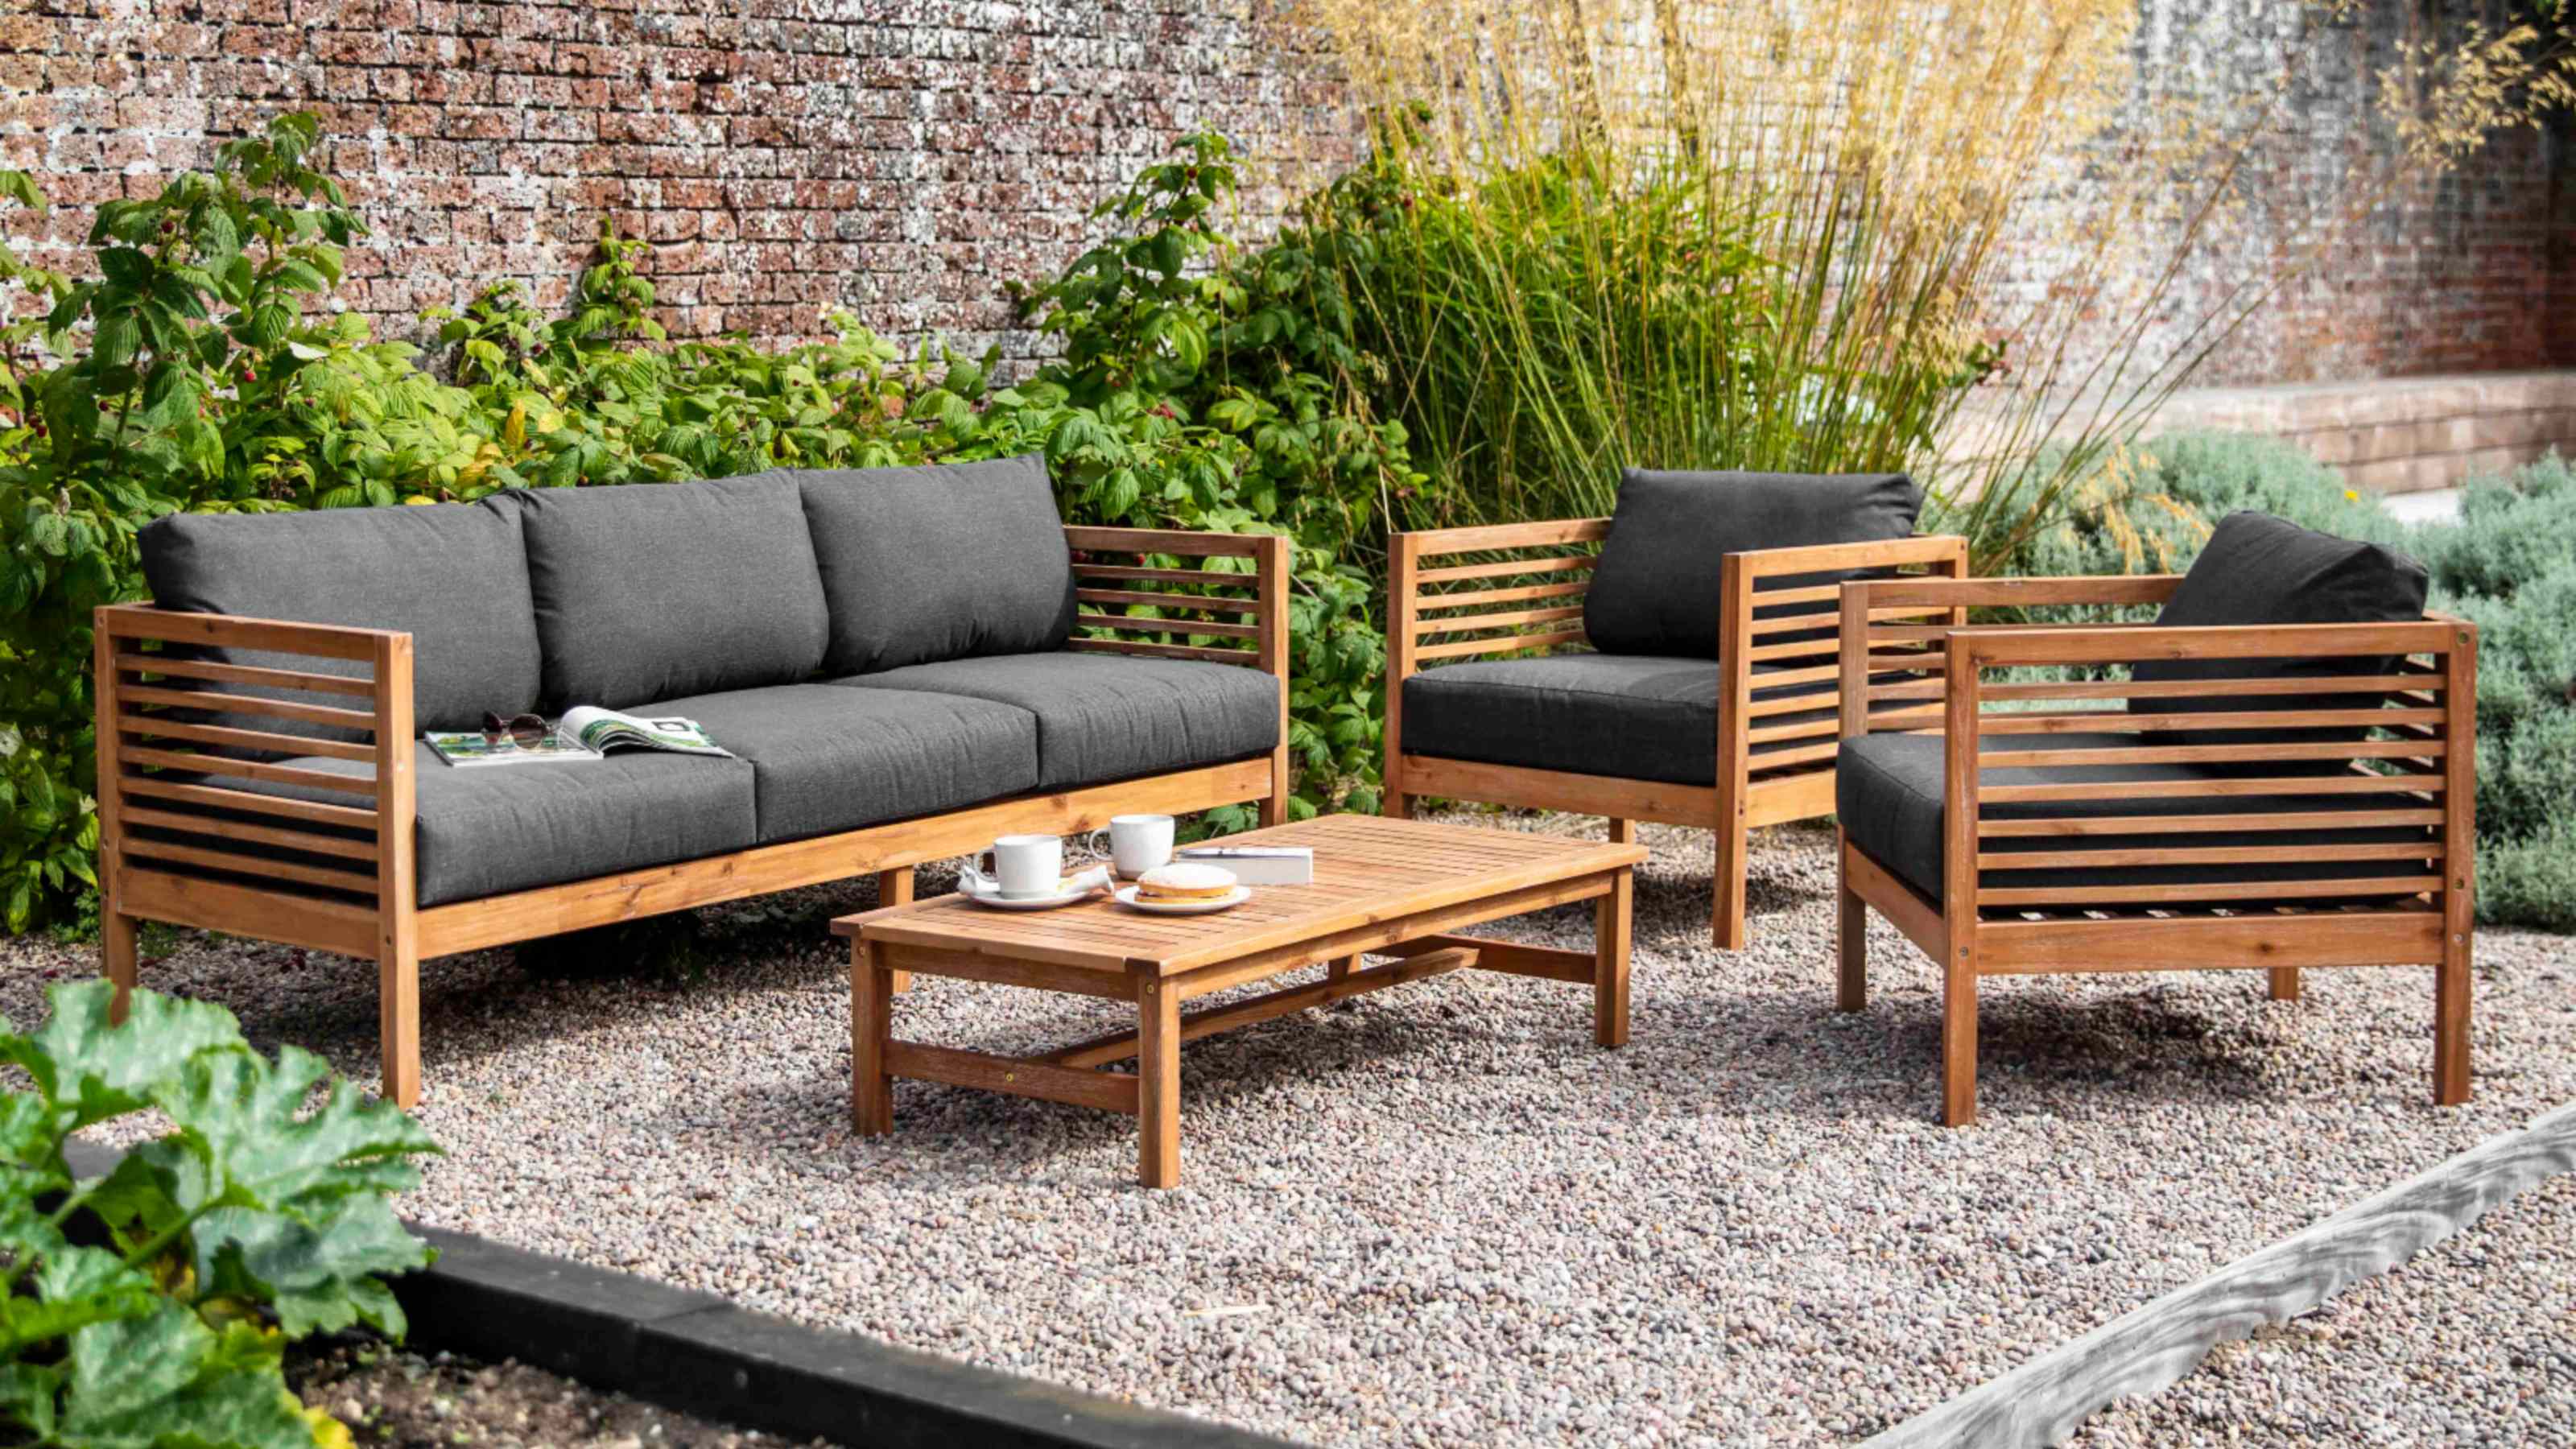 Best Wooden Garden Furniture 2021, Wooden Garden Sofa Set With Cushions